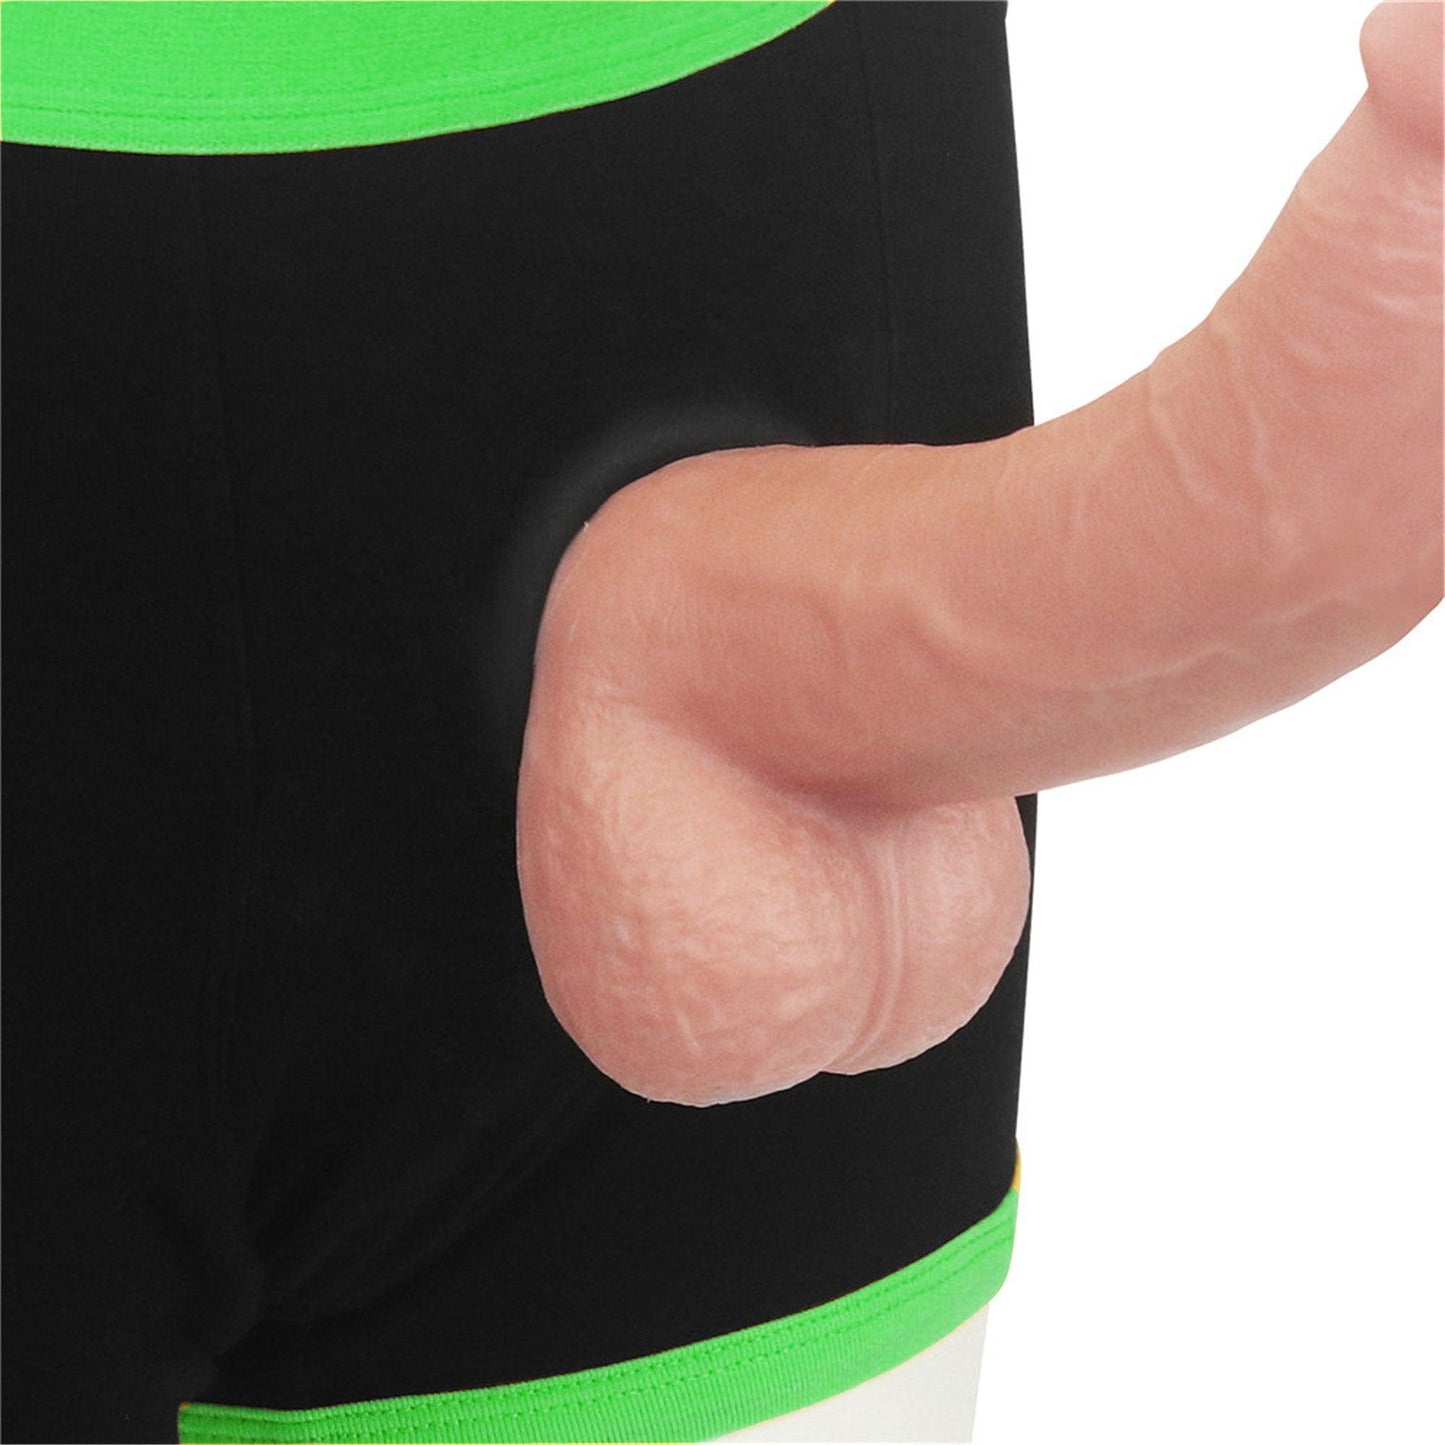 Get Lucky Strap on Boxer Shorts - Medium/large - Black/green - My Sex Toy Hub